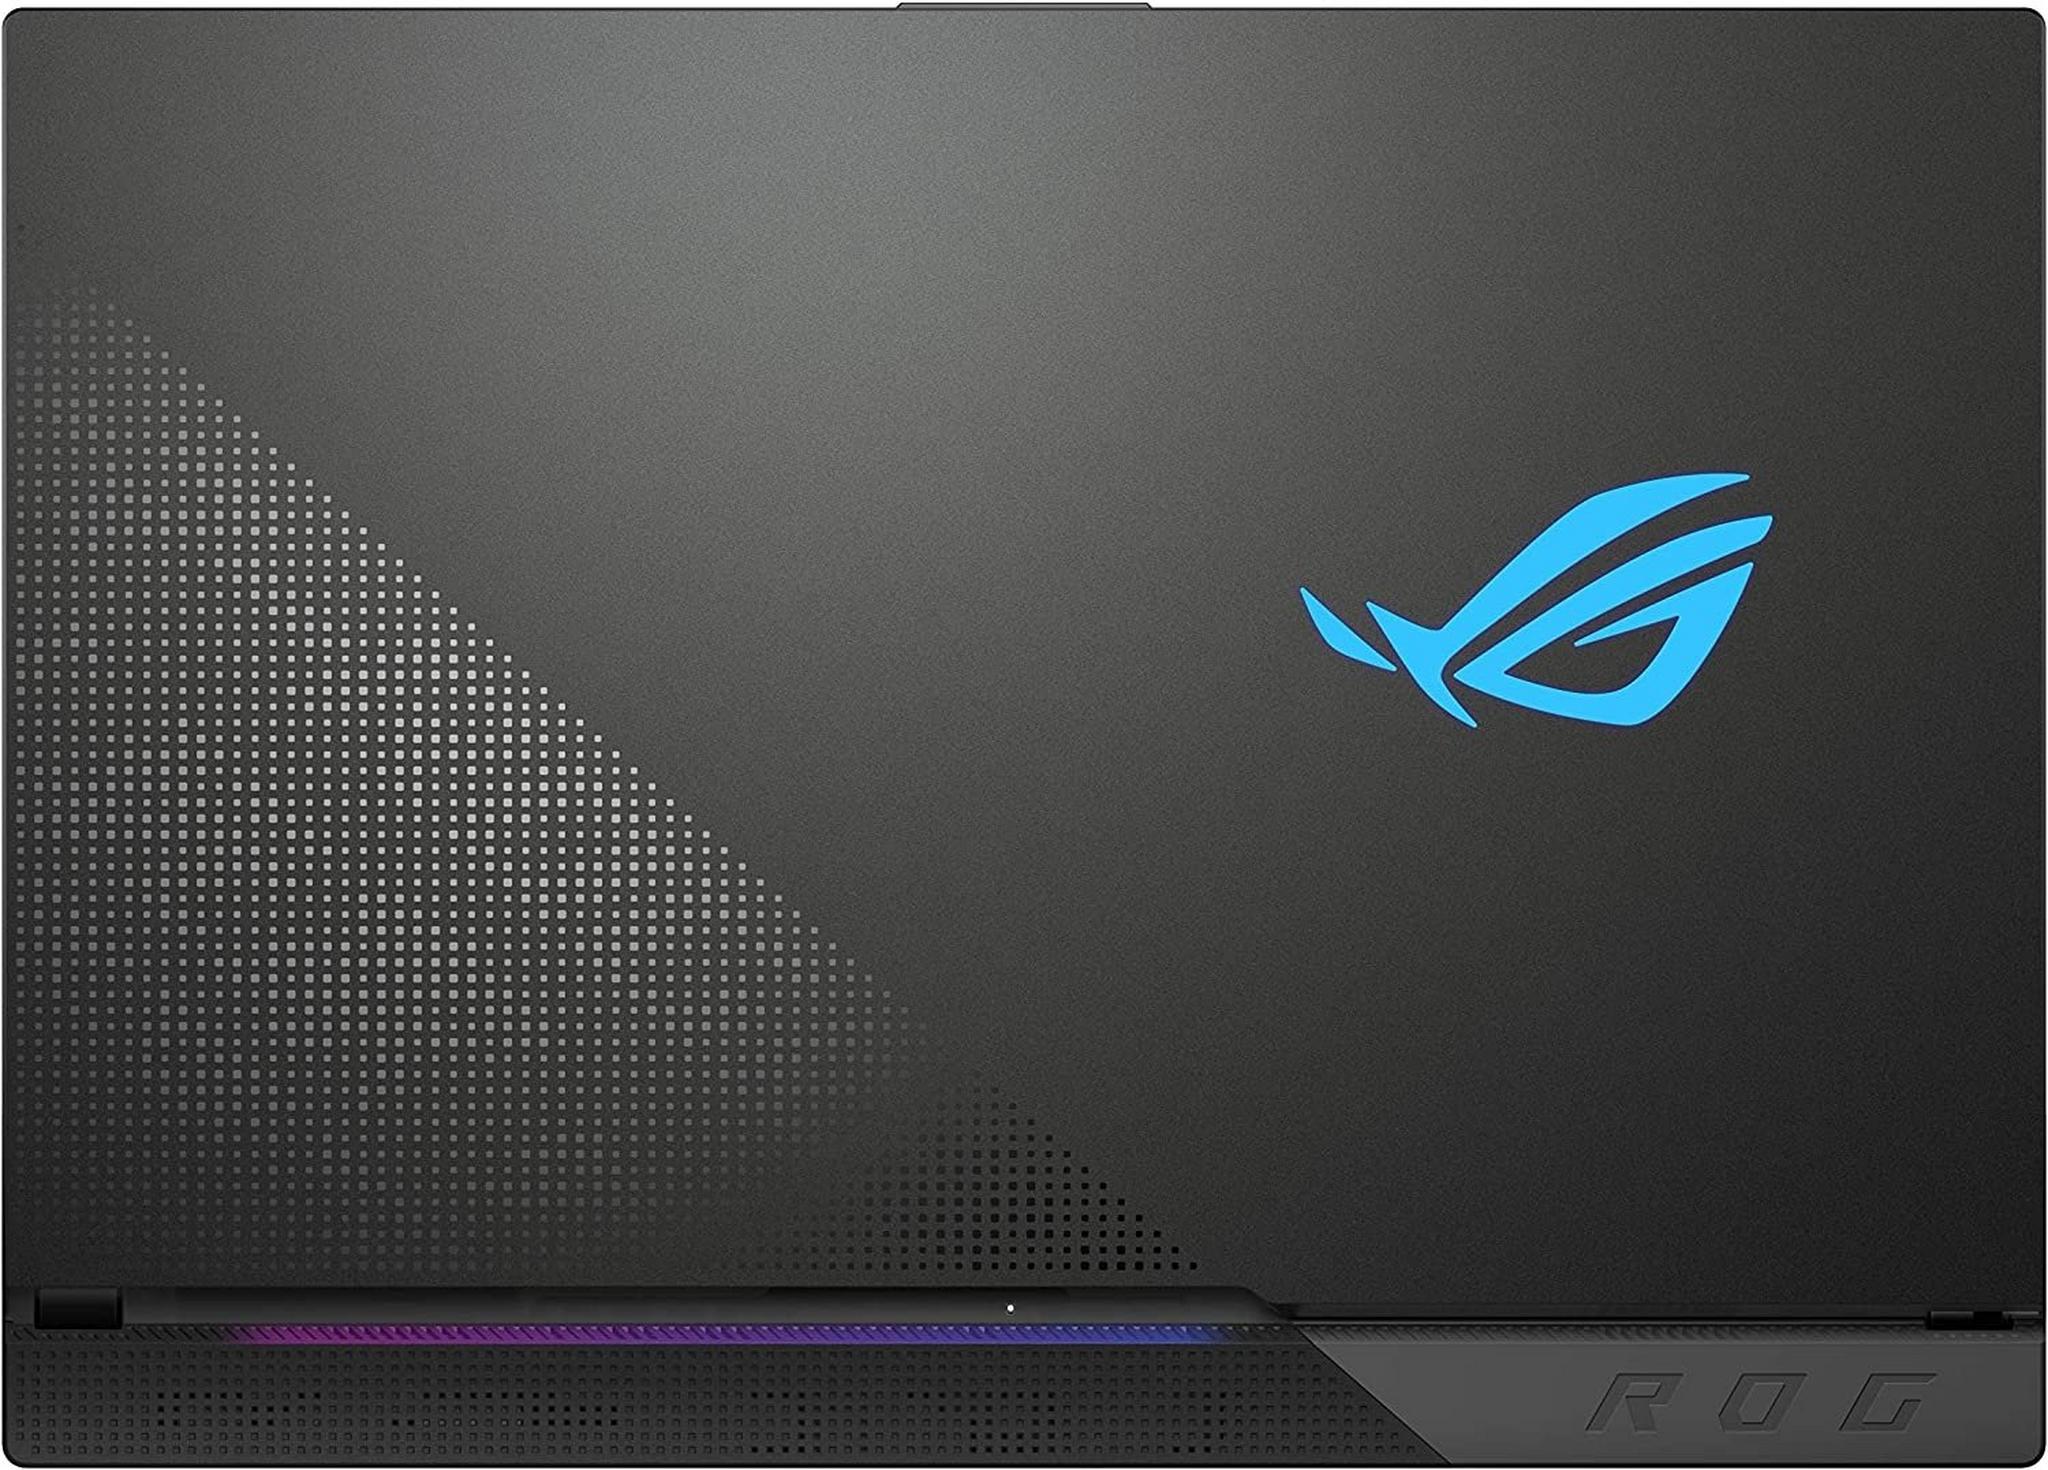 Asus ROG Strix Scar 17 SE, Intel Core i9 12th Gen, 32GB RAM, 1TB SSD, 17.3-inch Nvidia RTX 3080Ti Gaming Laptop